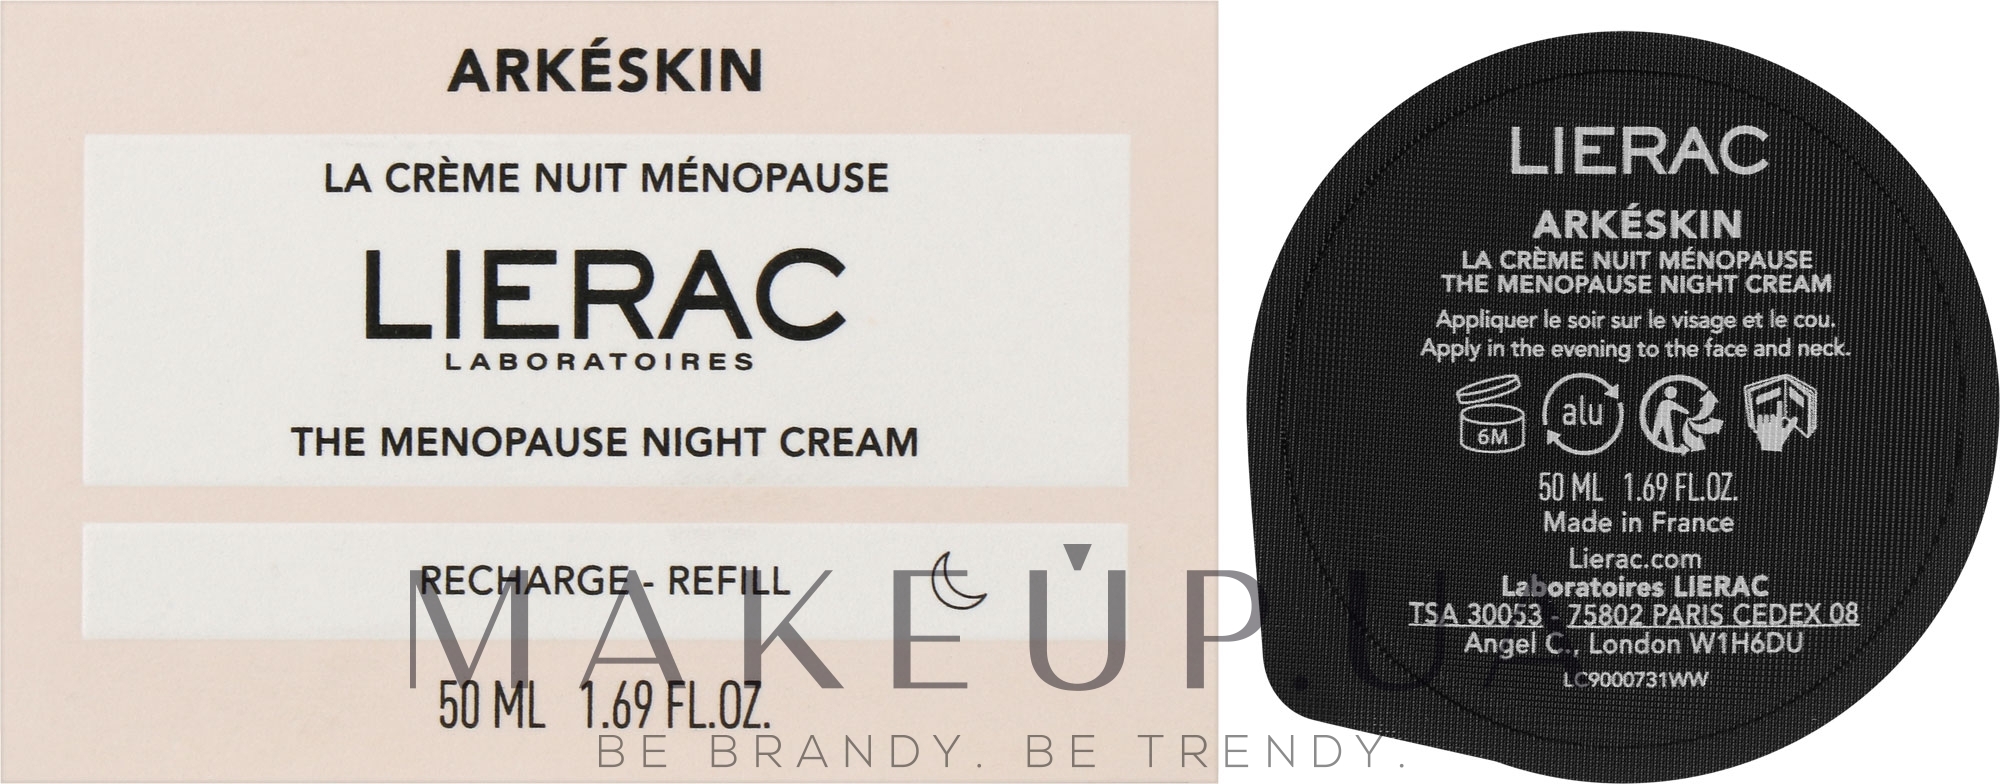 Ночной крем для лица - Lierac Arkeskin The Menopause Night Cream Refill (сменный блок) — фото 50ml